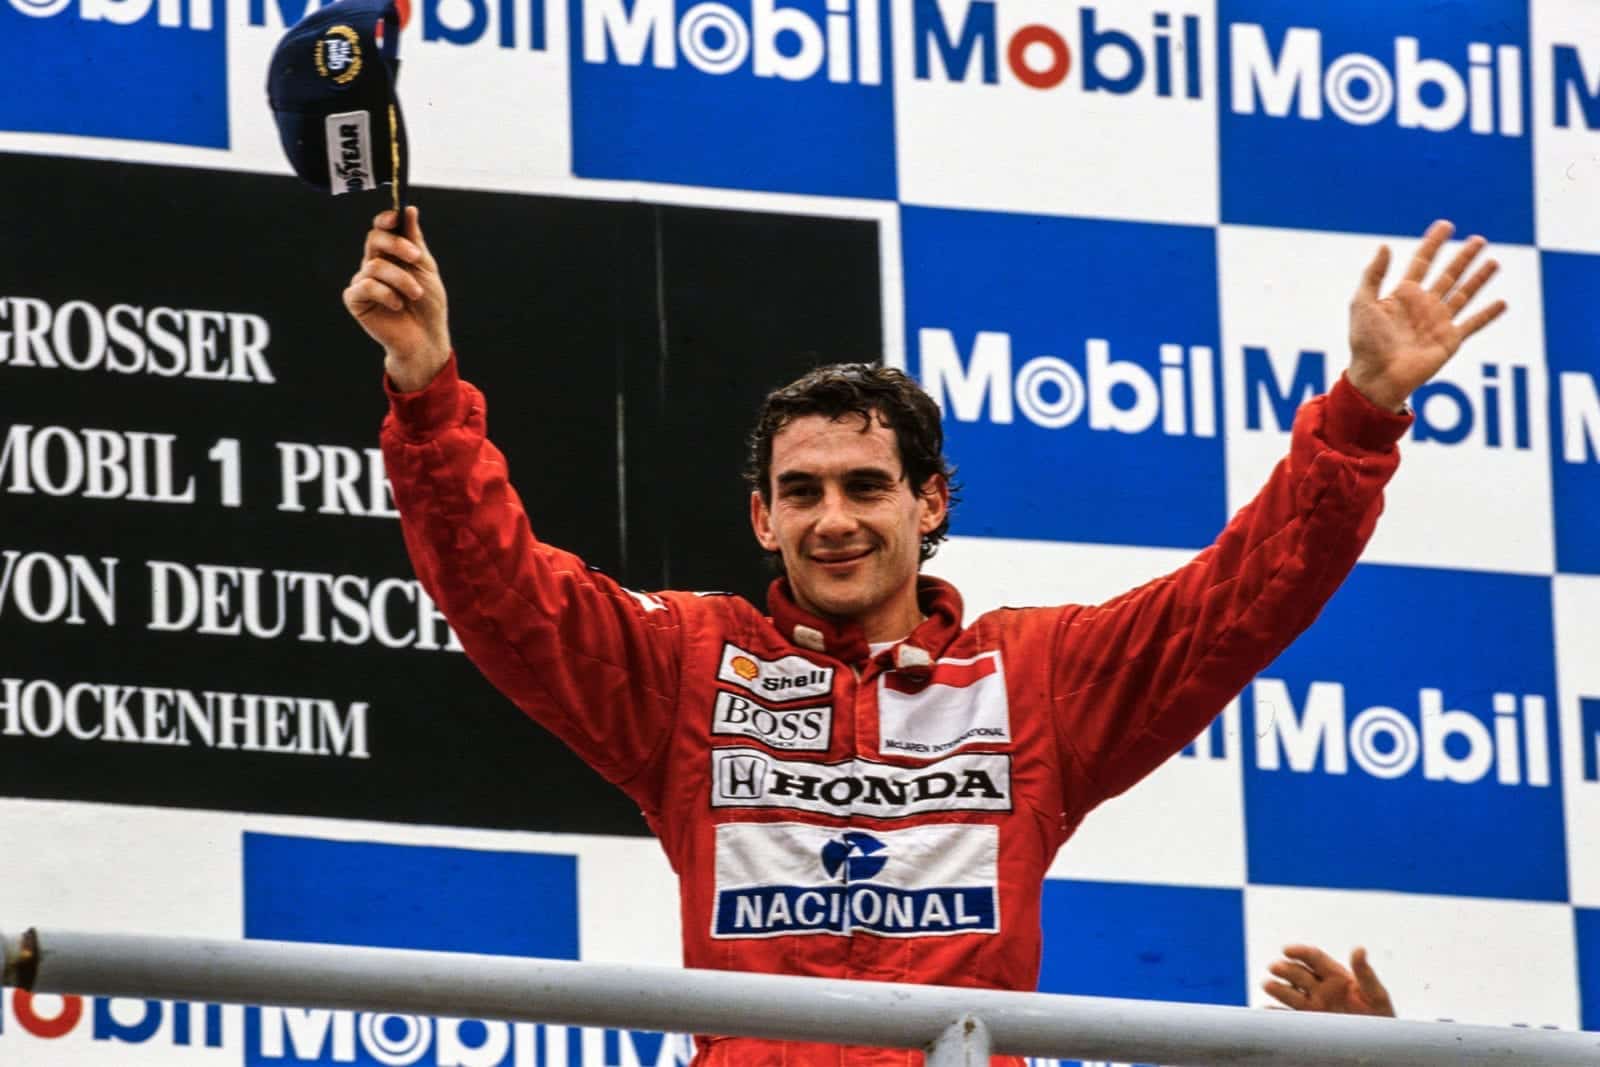 1989 GER GP podium